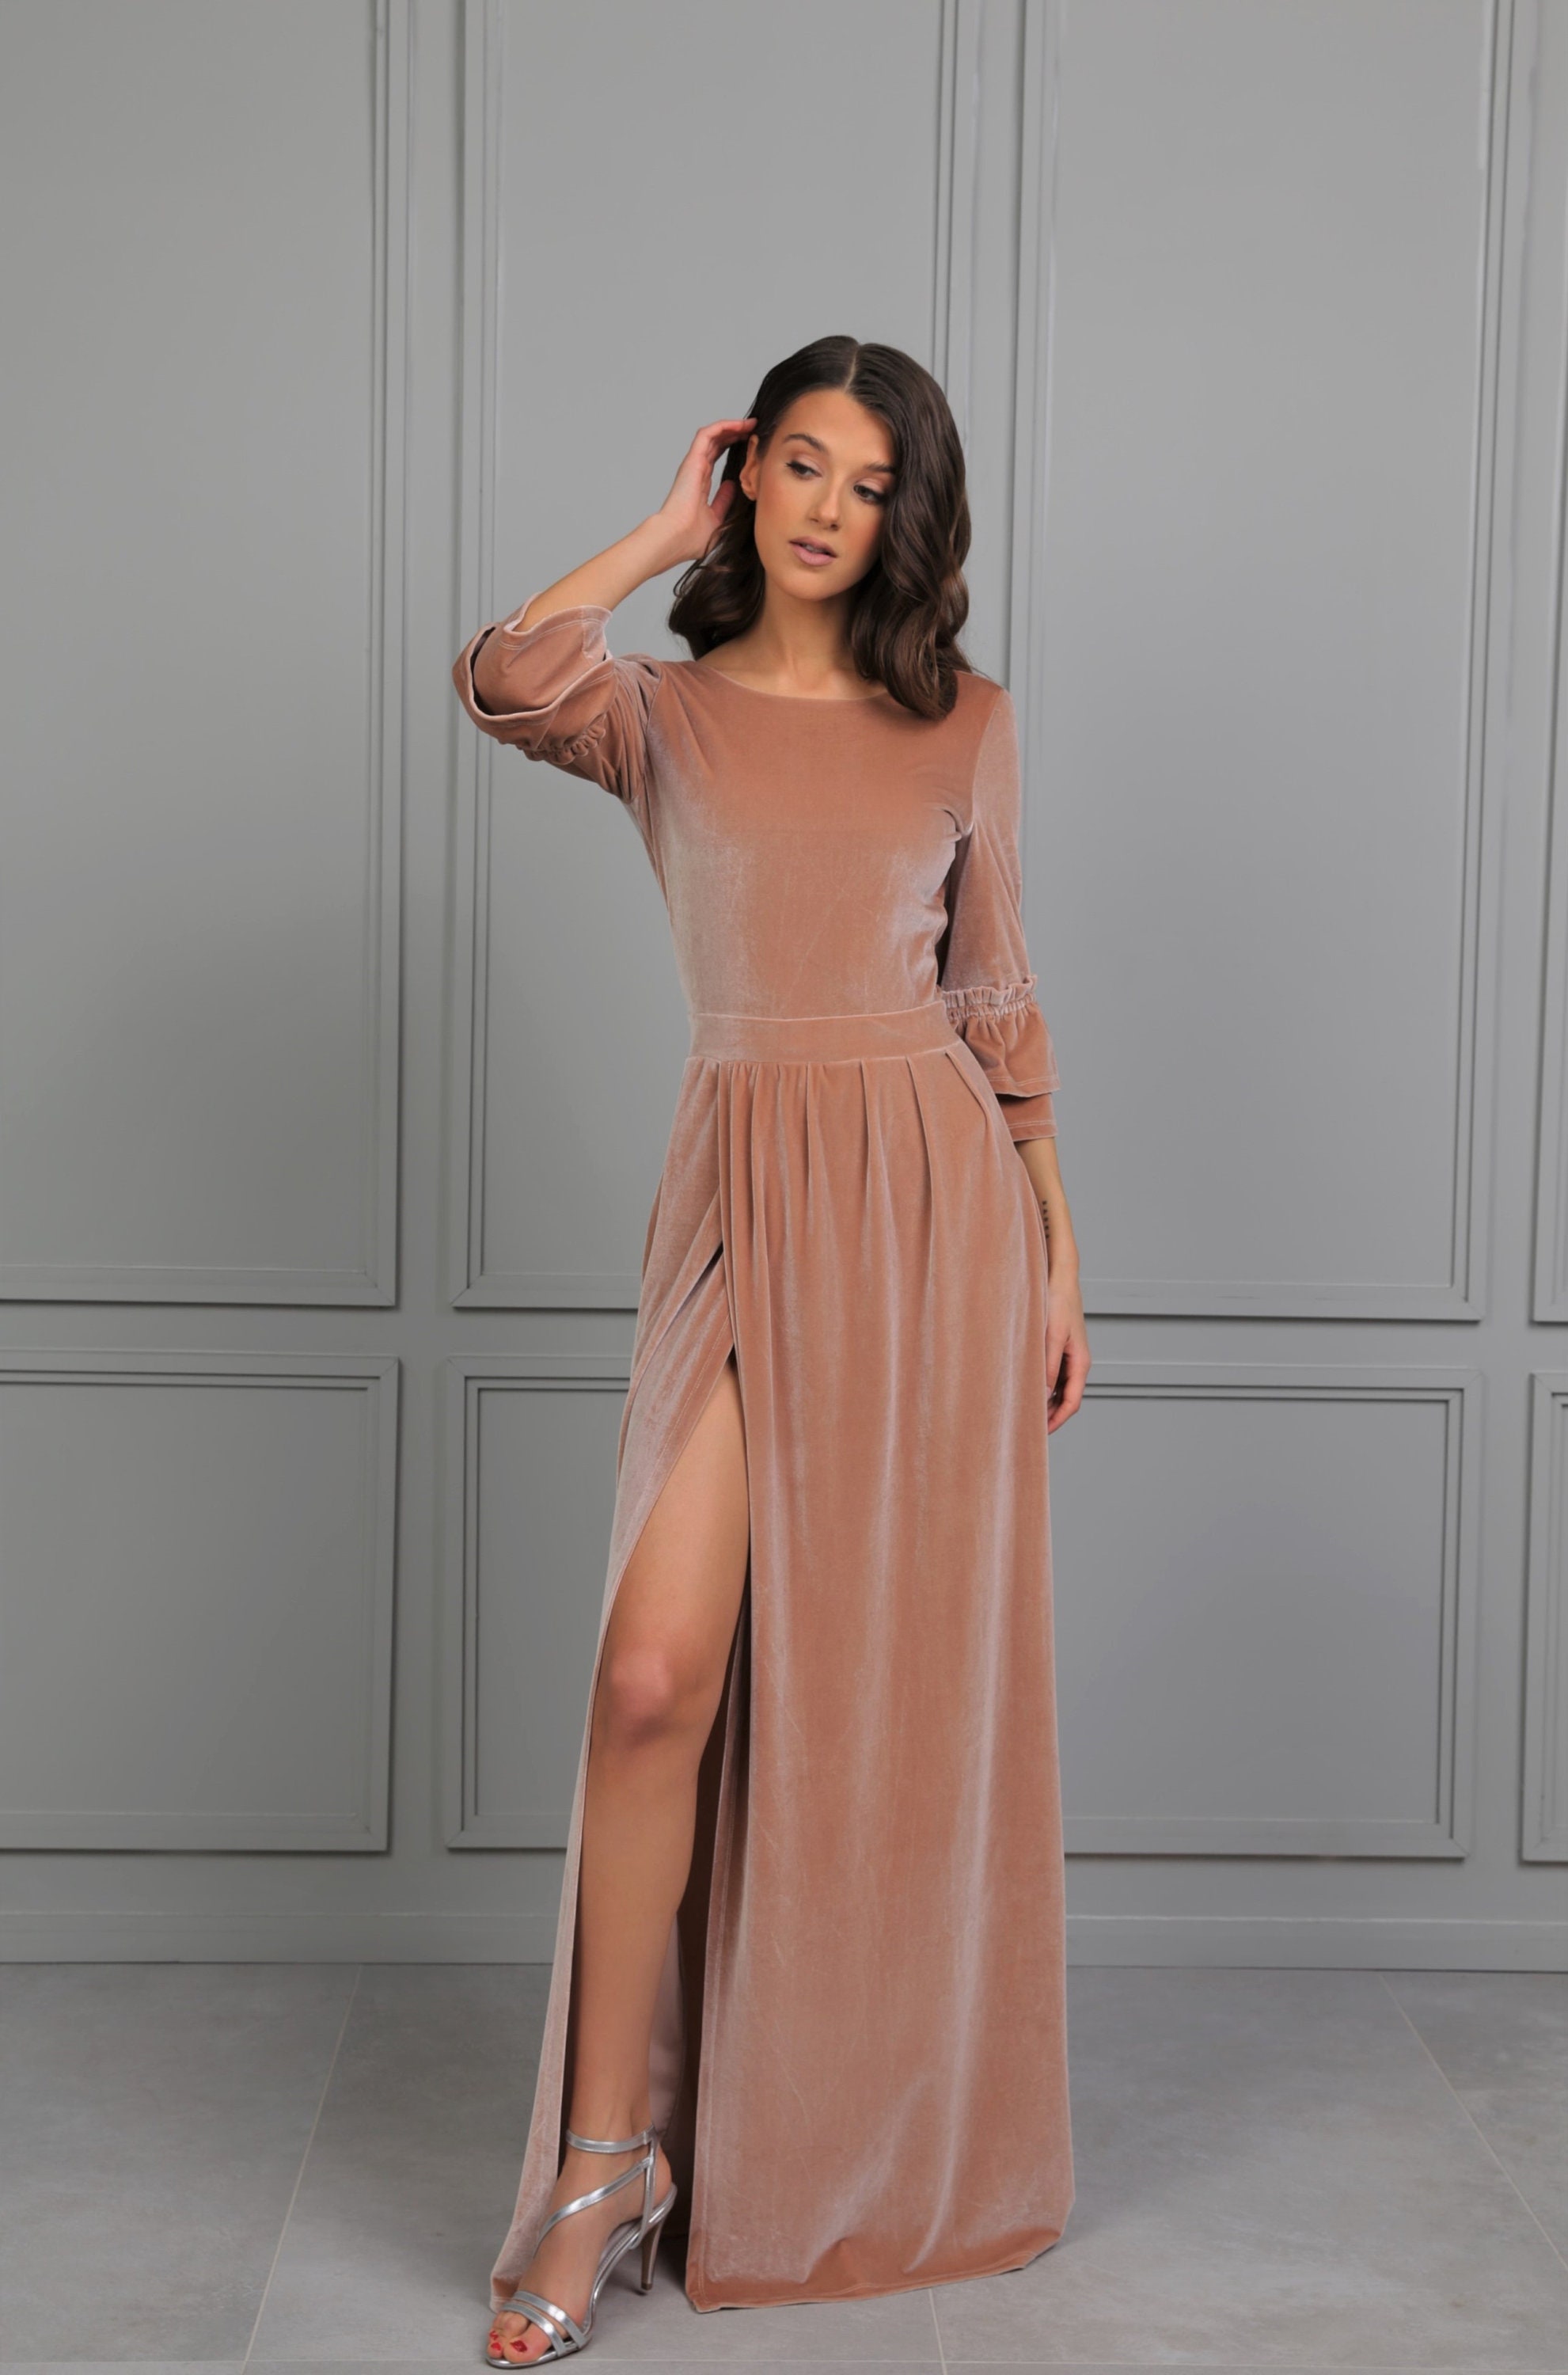 New Trends Long Dress Tassel Dress Evening Dress Long Sleeve Lace Velvet Maxi Dress Party Dress High Quality Club Dresses